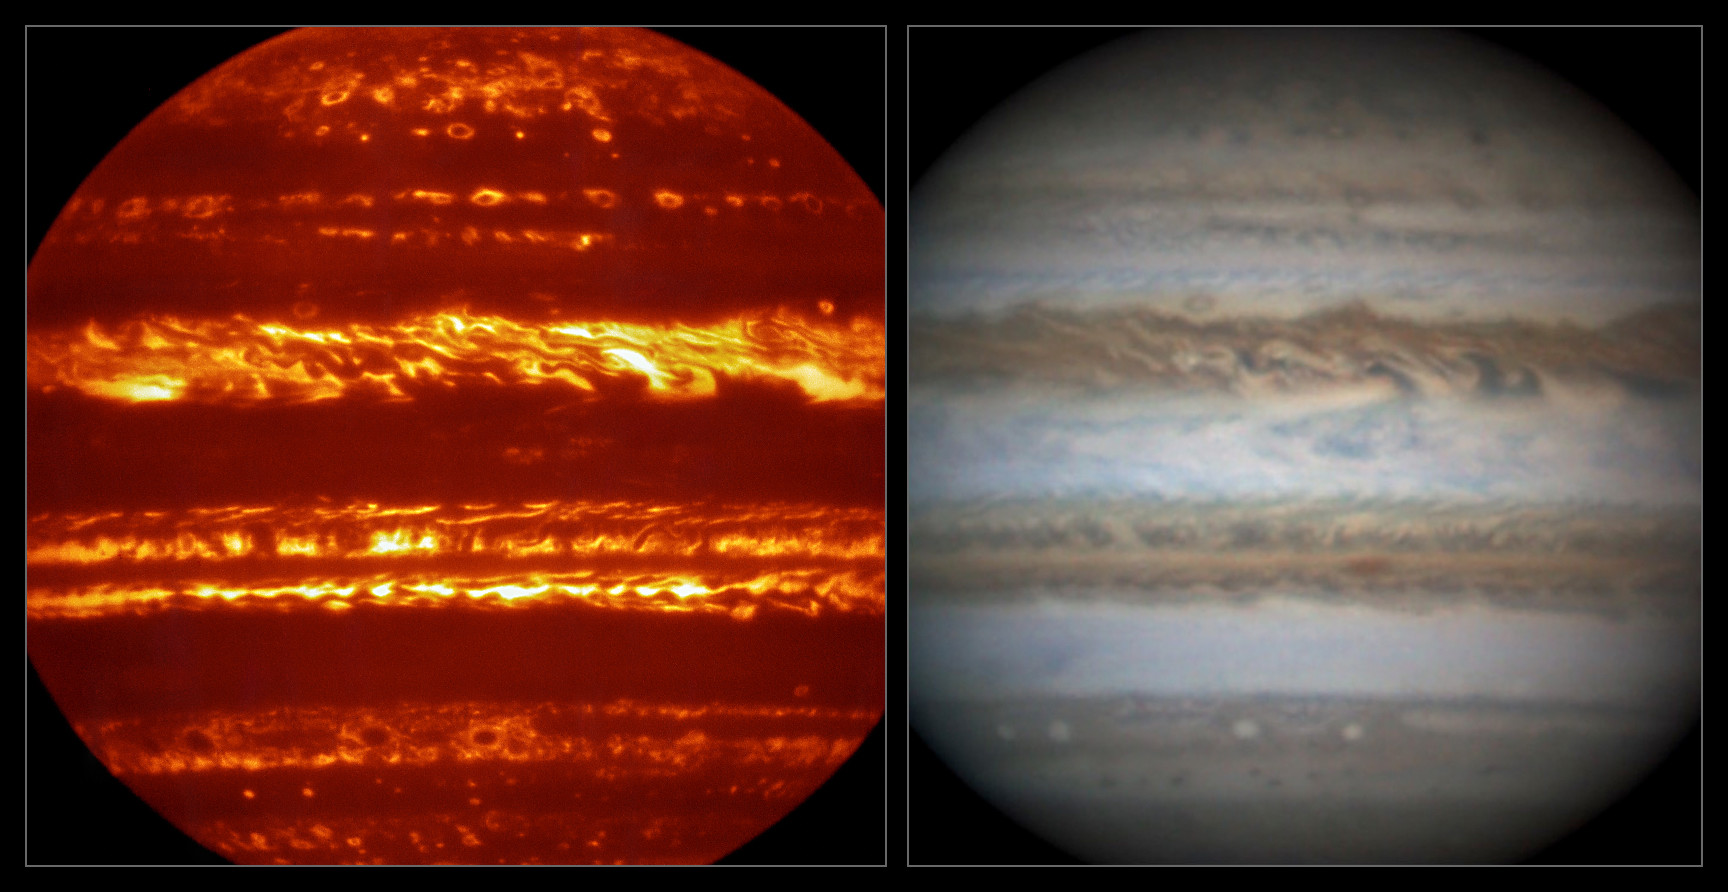 Comparison of VISIR and Visible Light Images of Jupiter